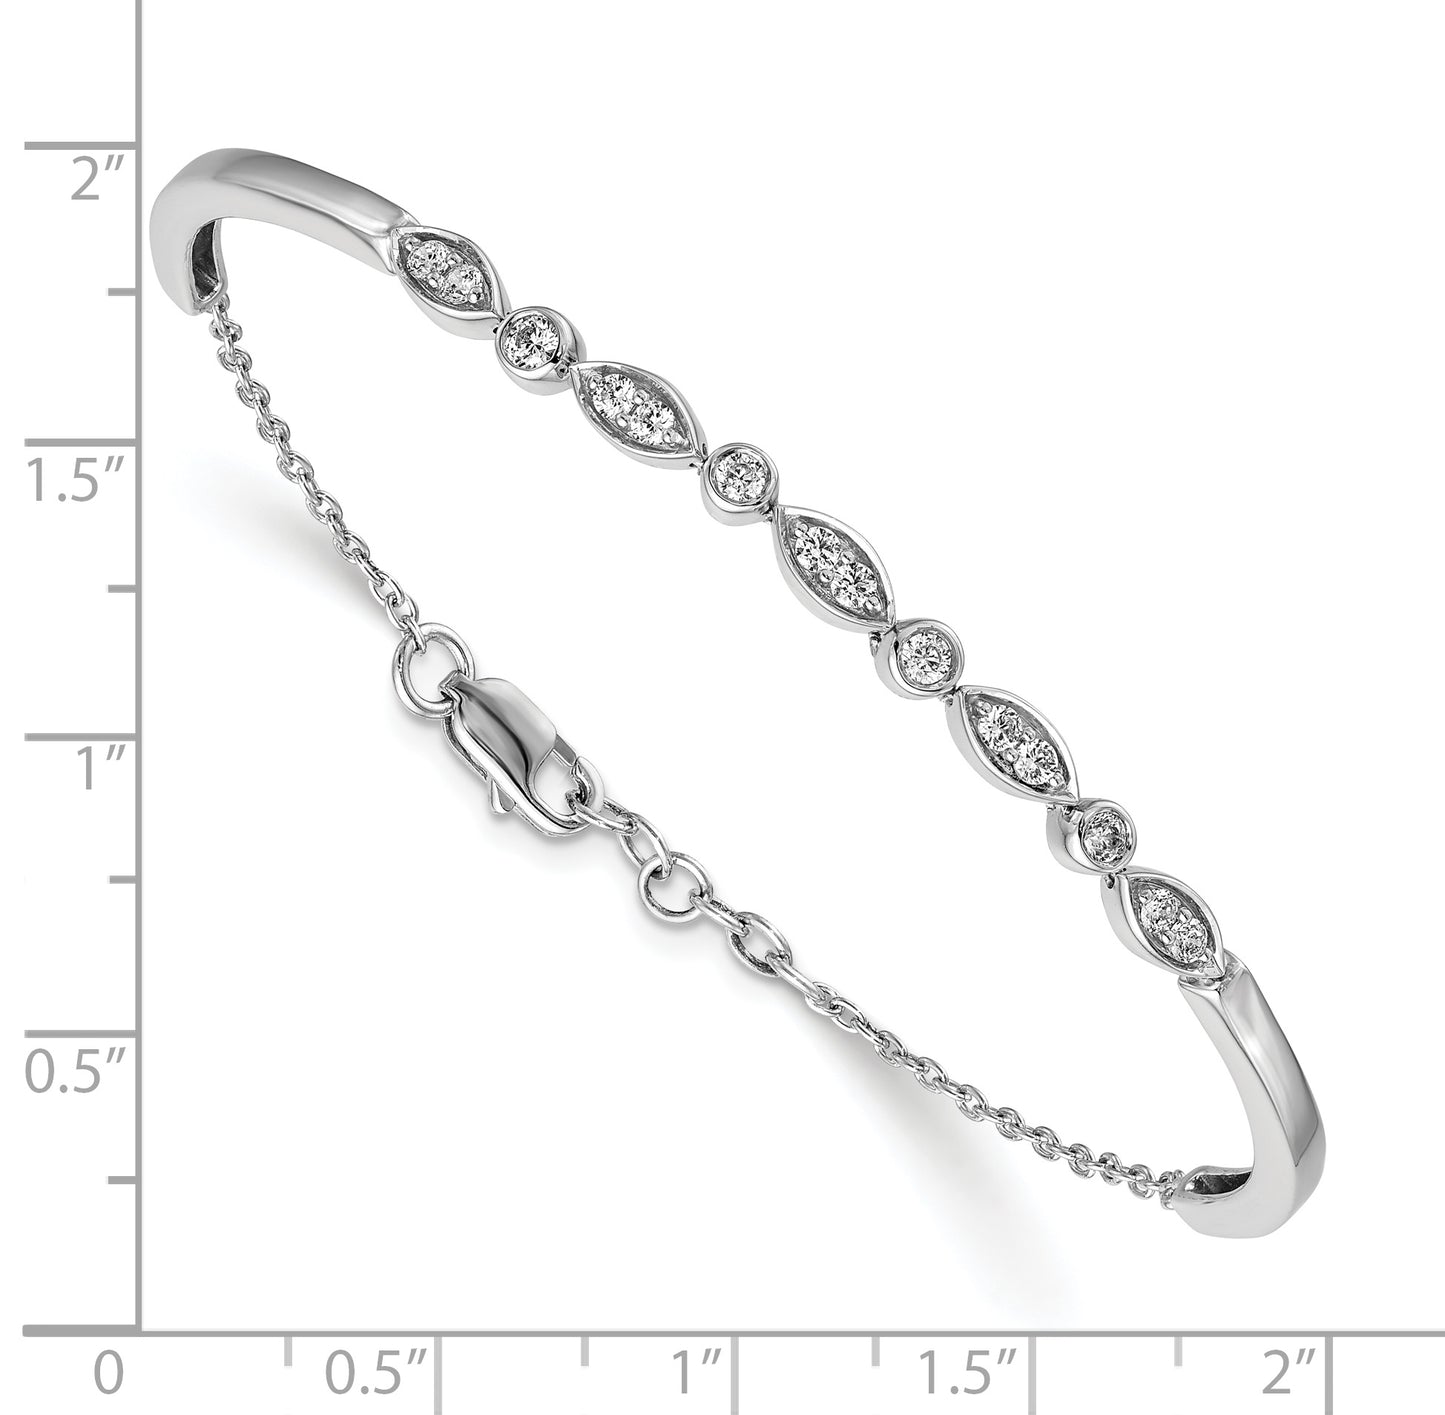 14k White Gold Diamond Bangle Bracelet